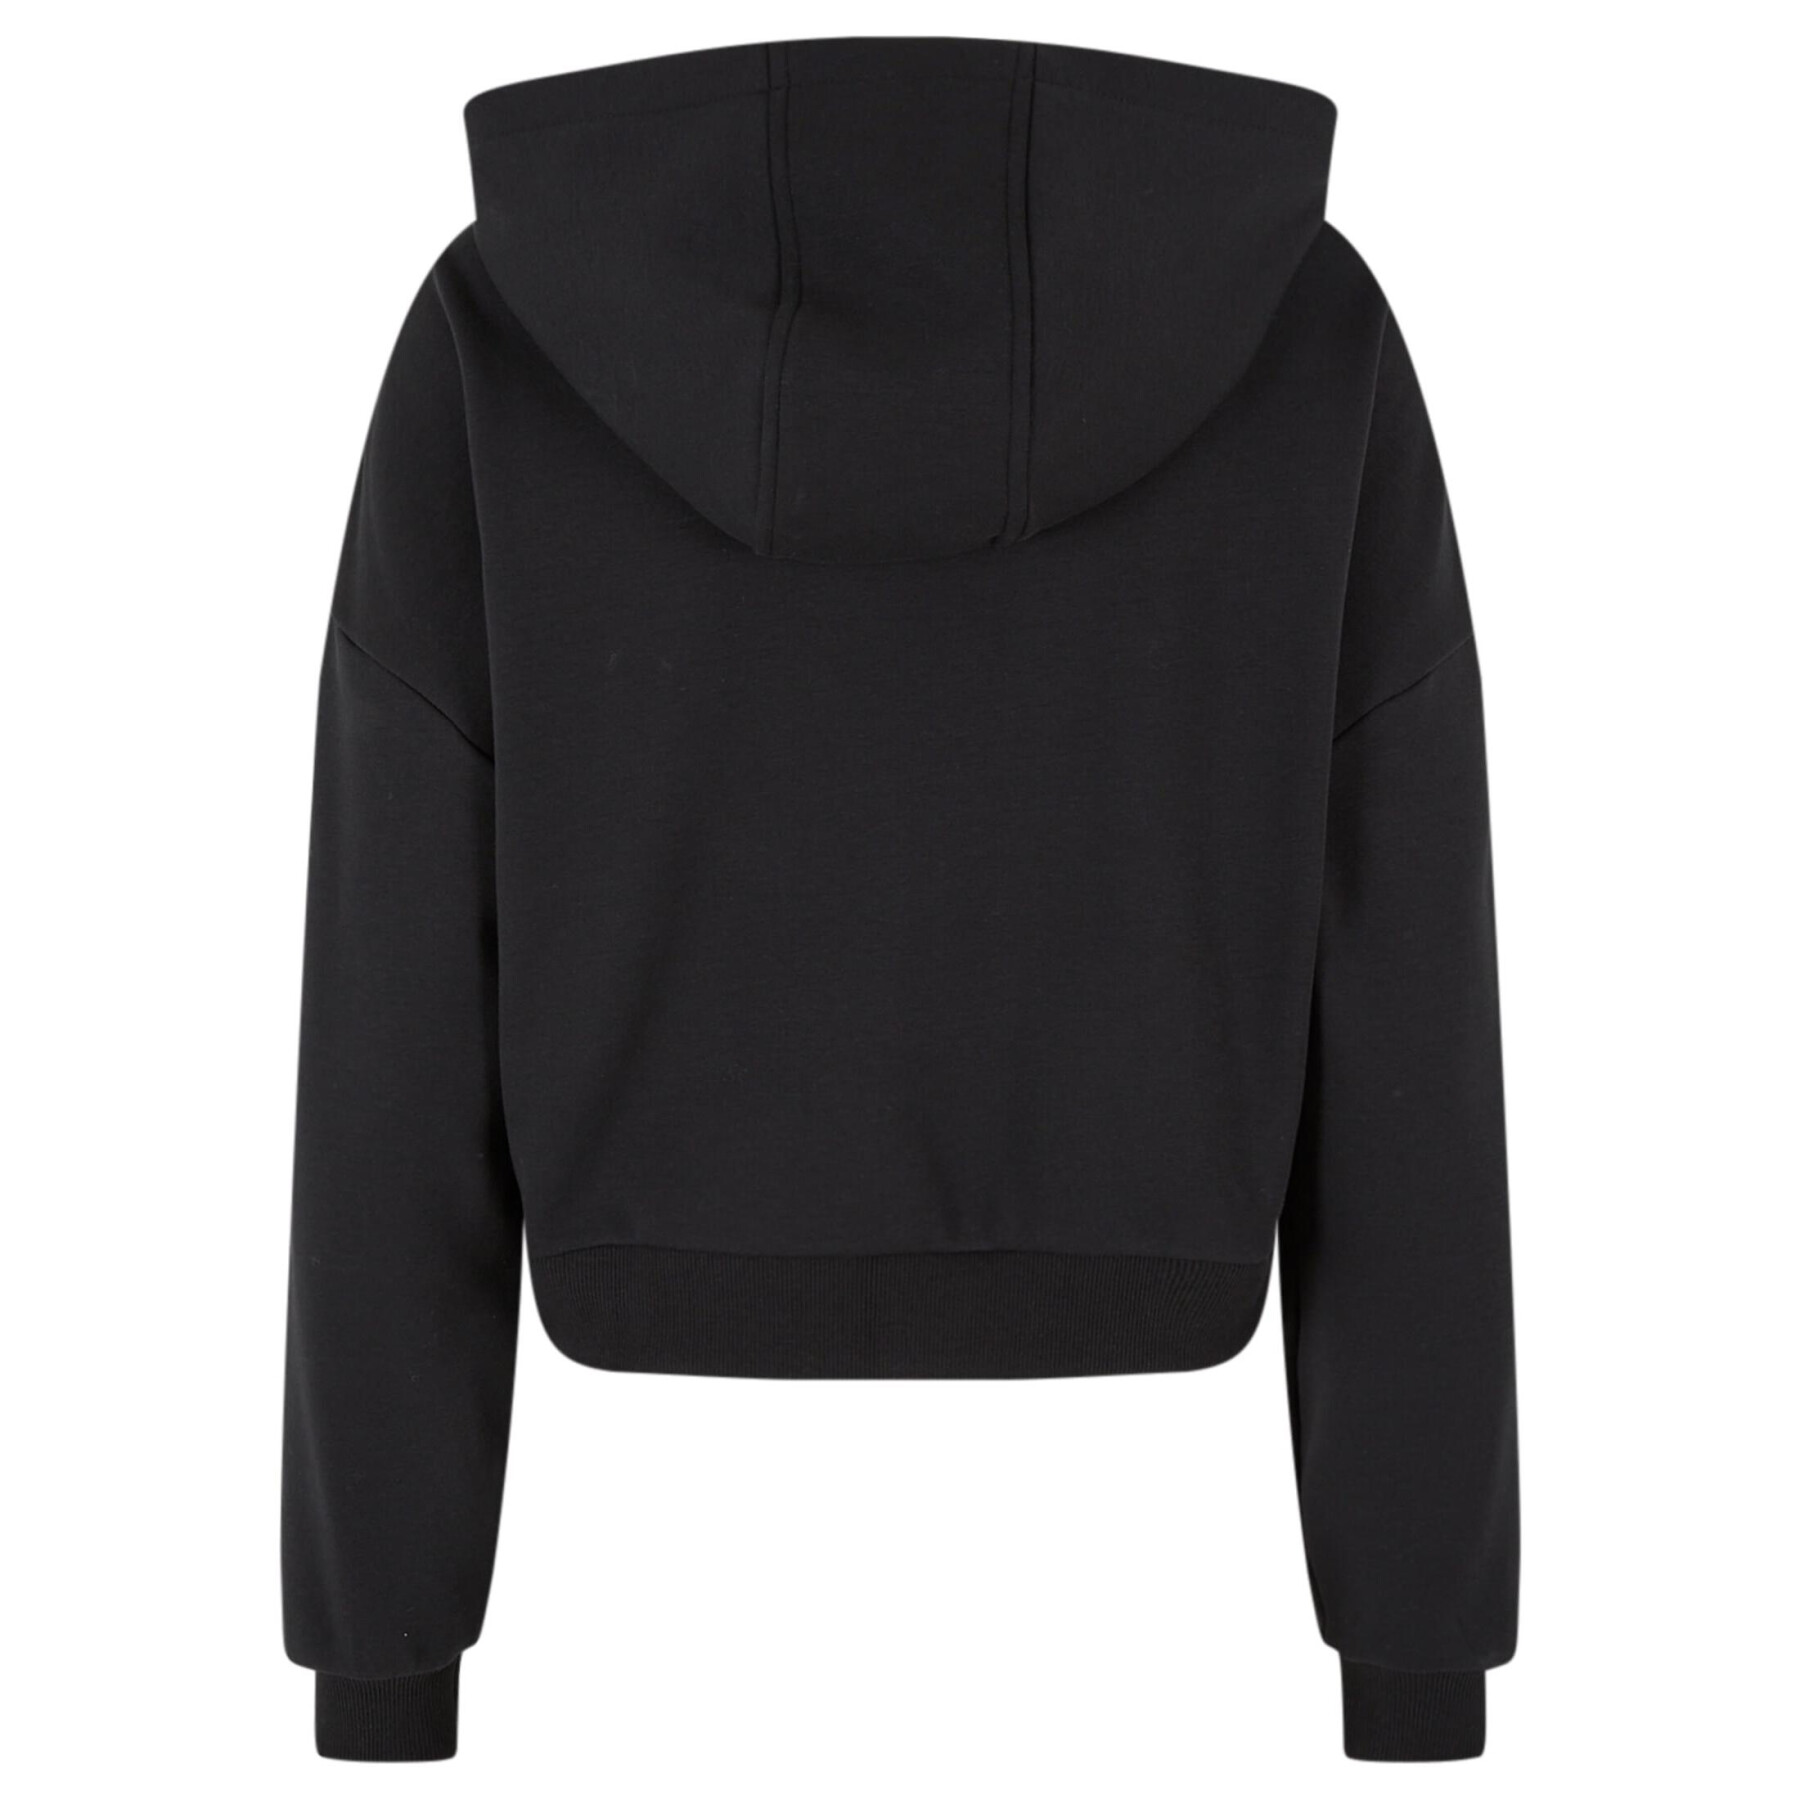 Kurzes Sweatshirt mit Kapuze und Reißverschluss, Damen Urban Classics Cozy